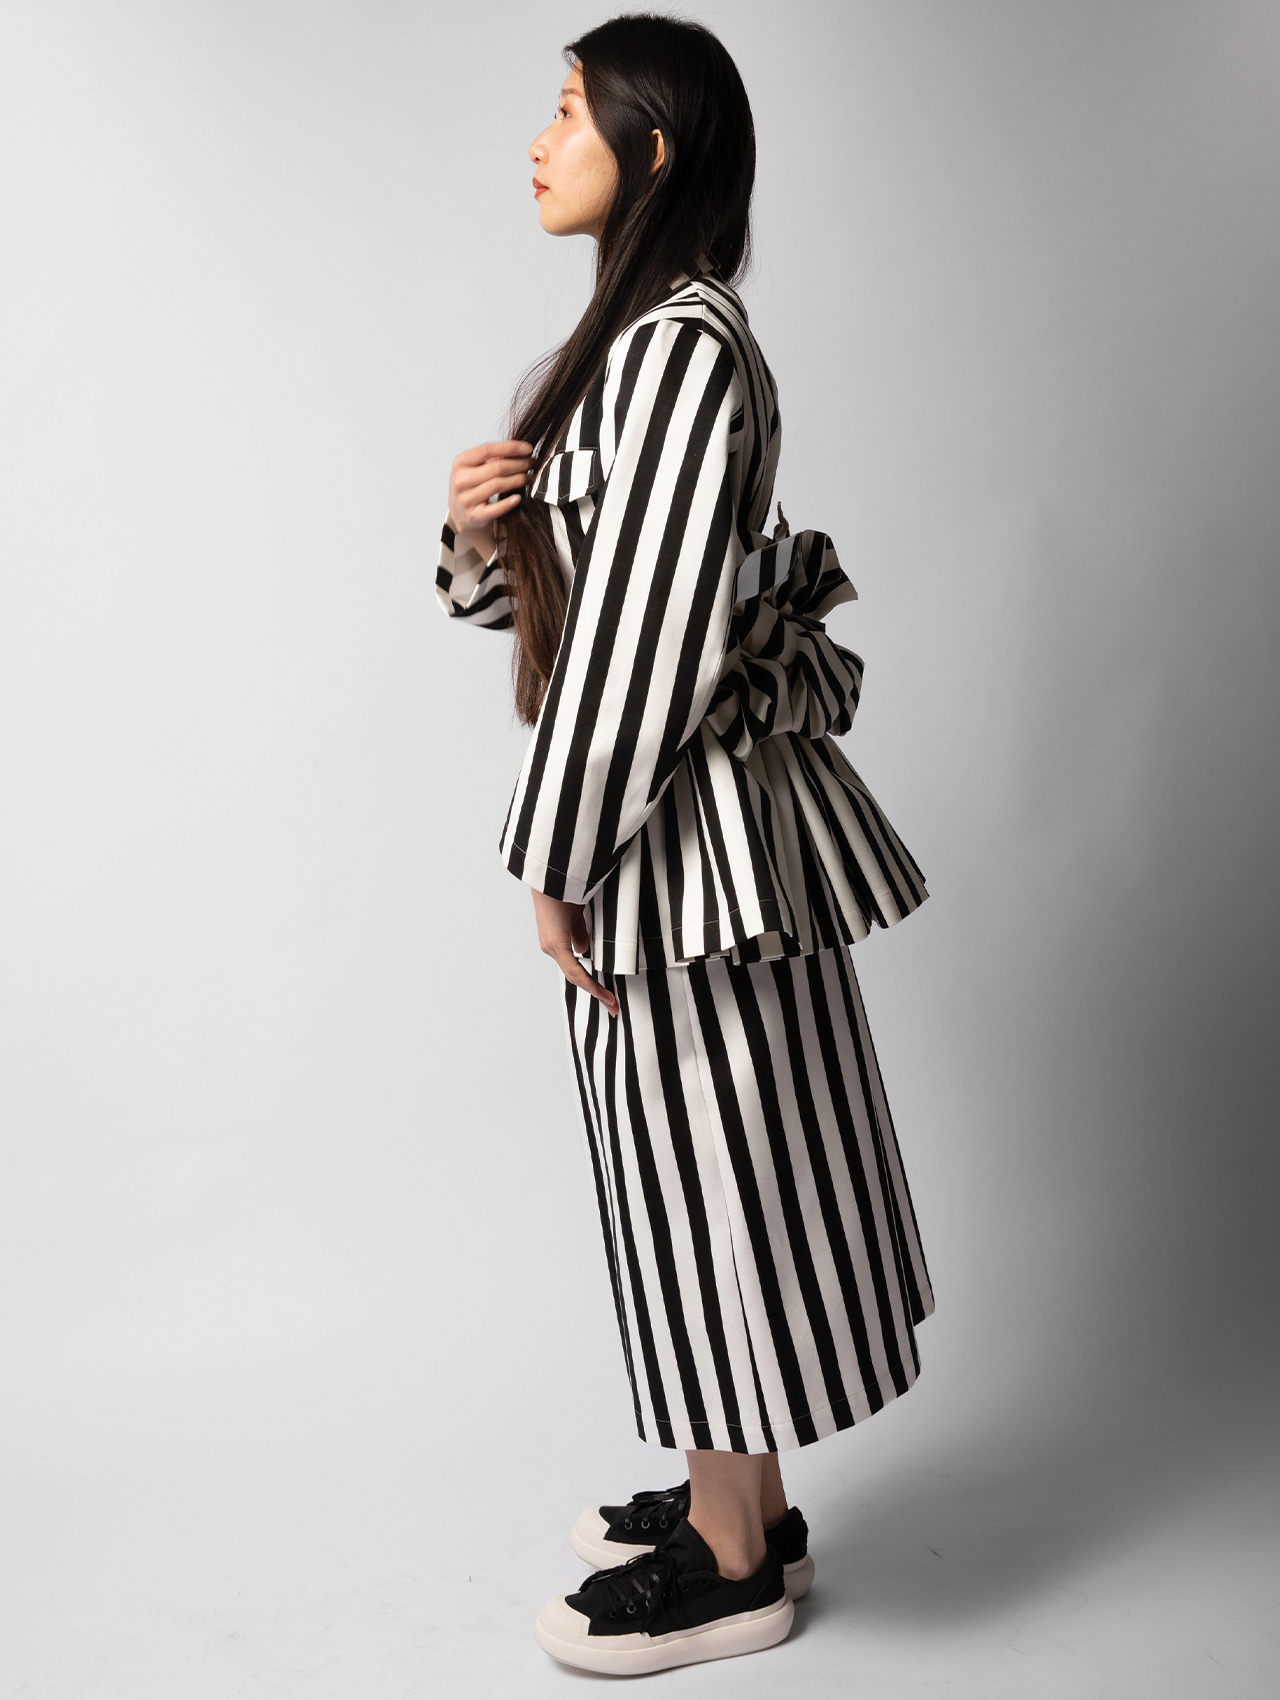 CDG TAO Black/White Striped Jacket